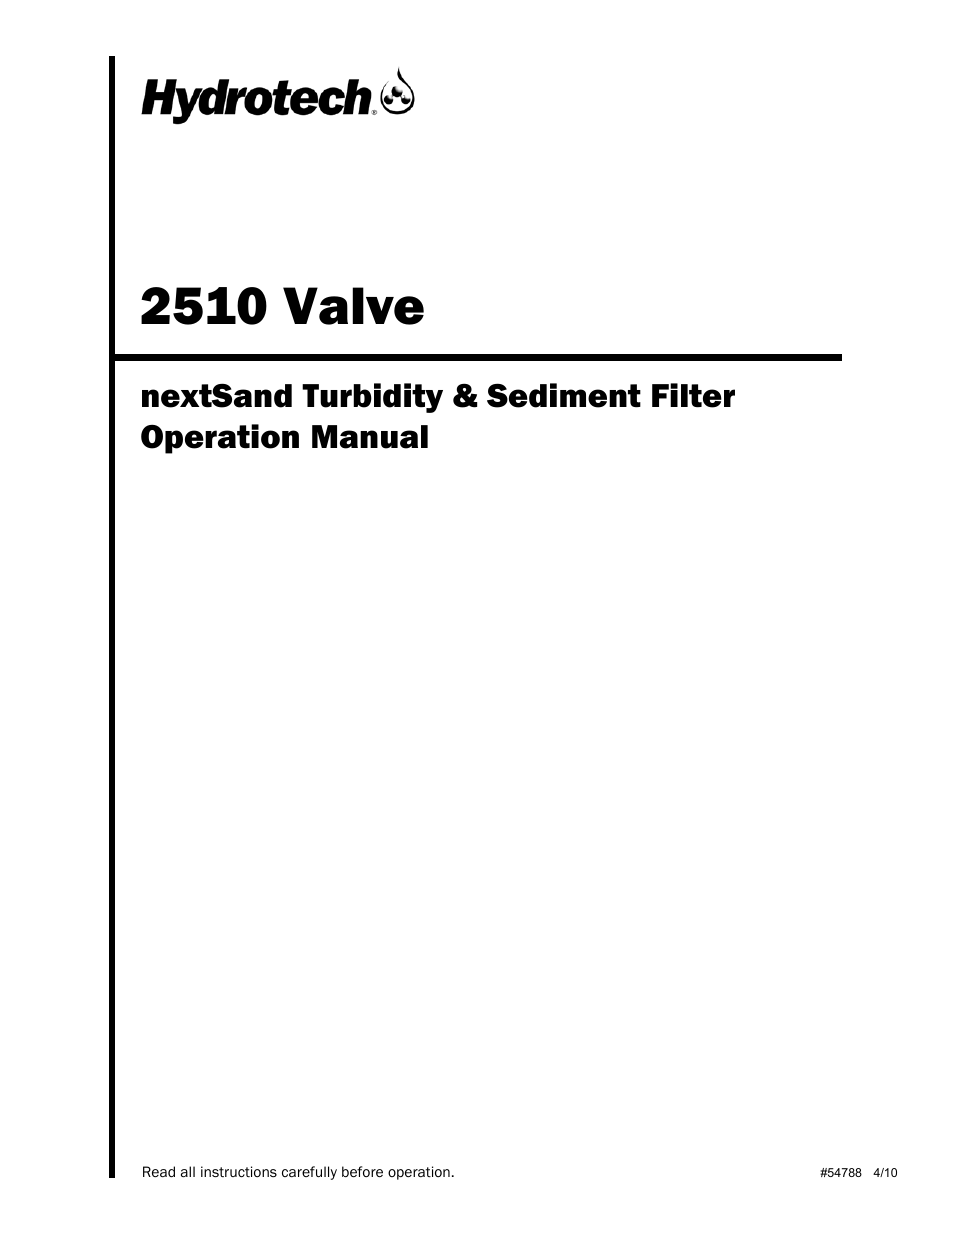 2510 Valve nextSand Turbidity & Sediment Filter Operation Manual